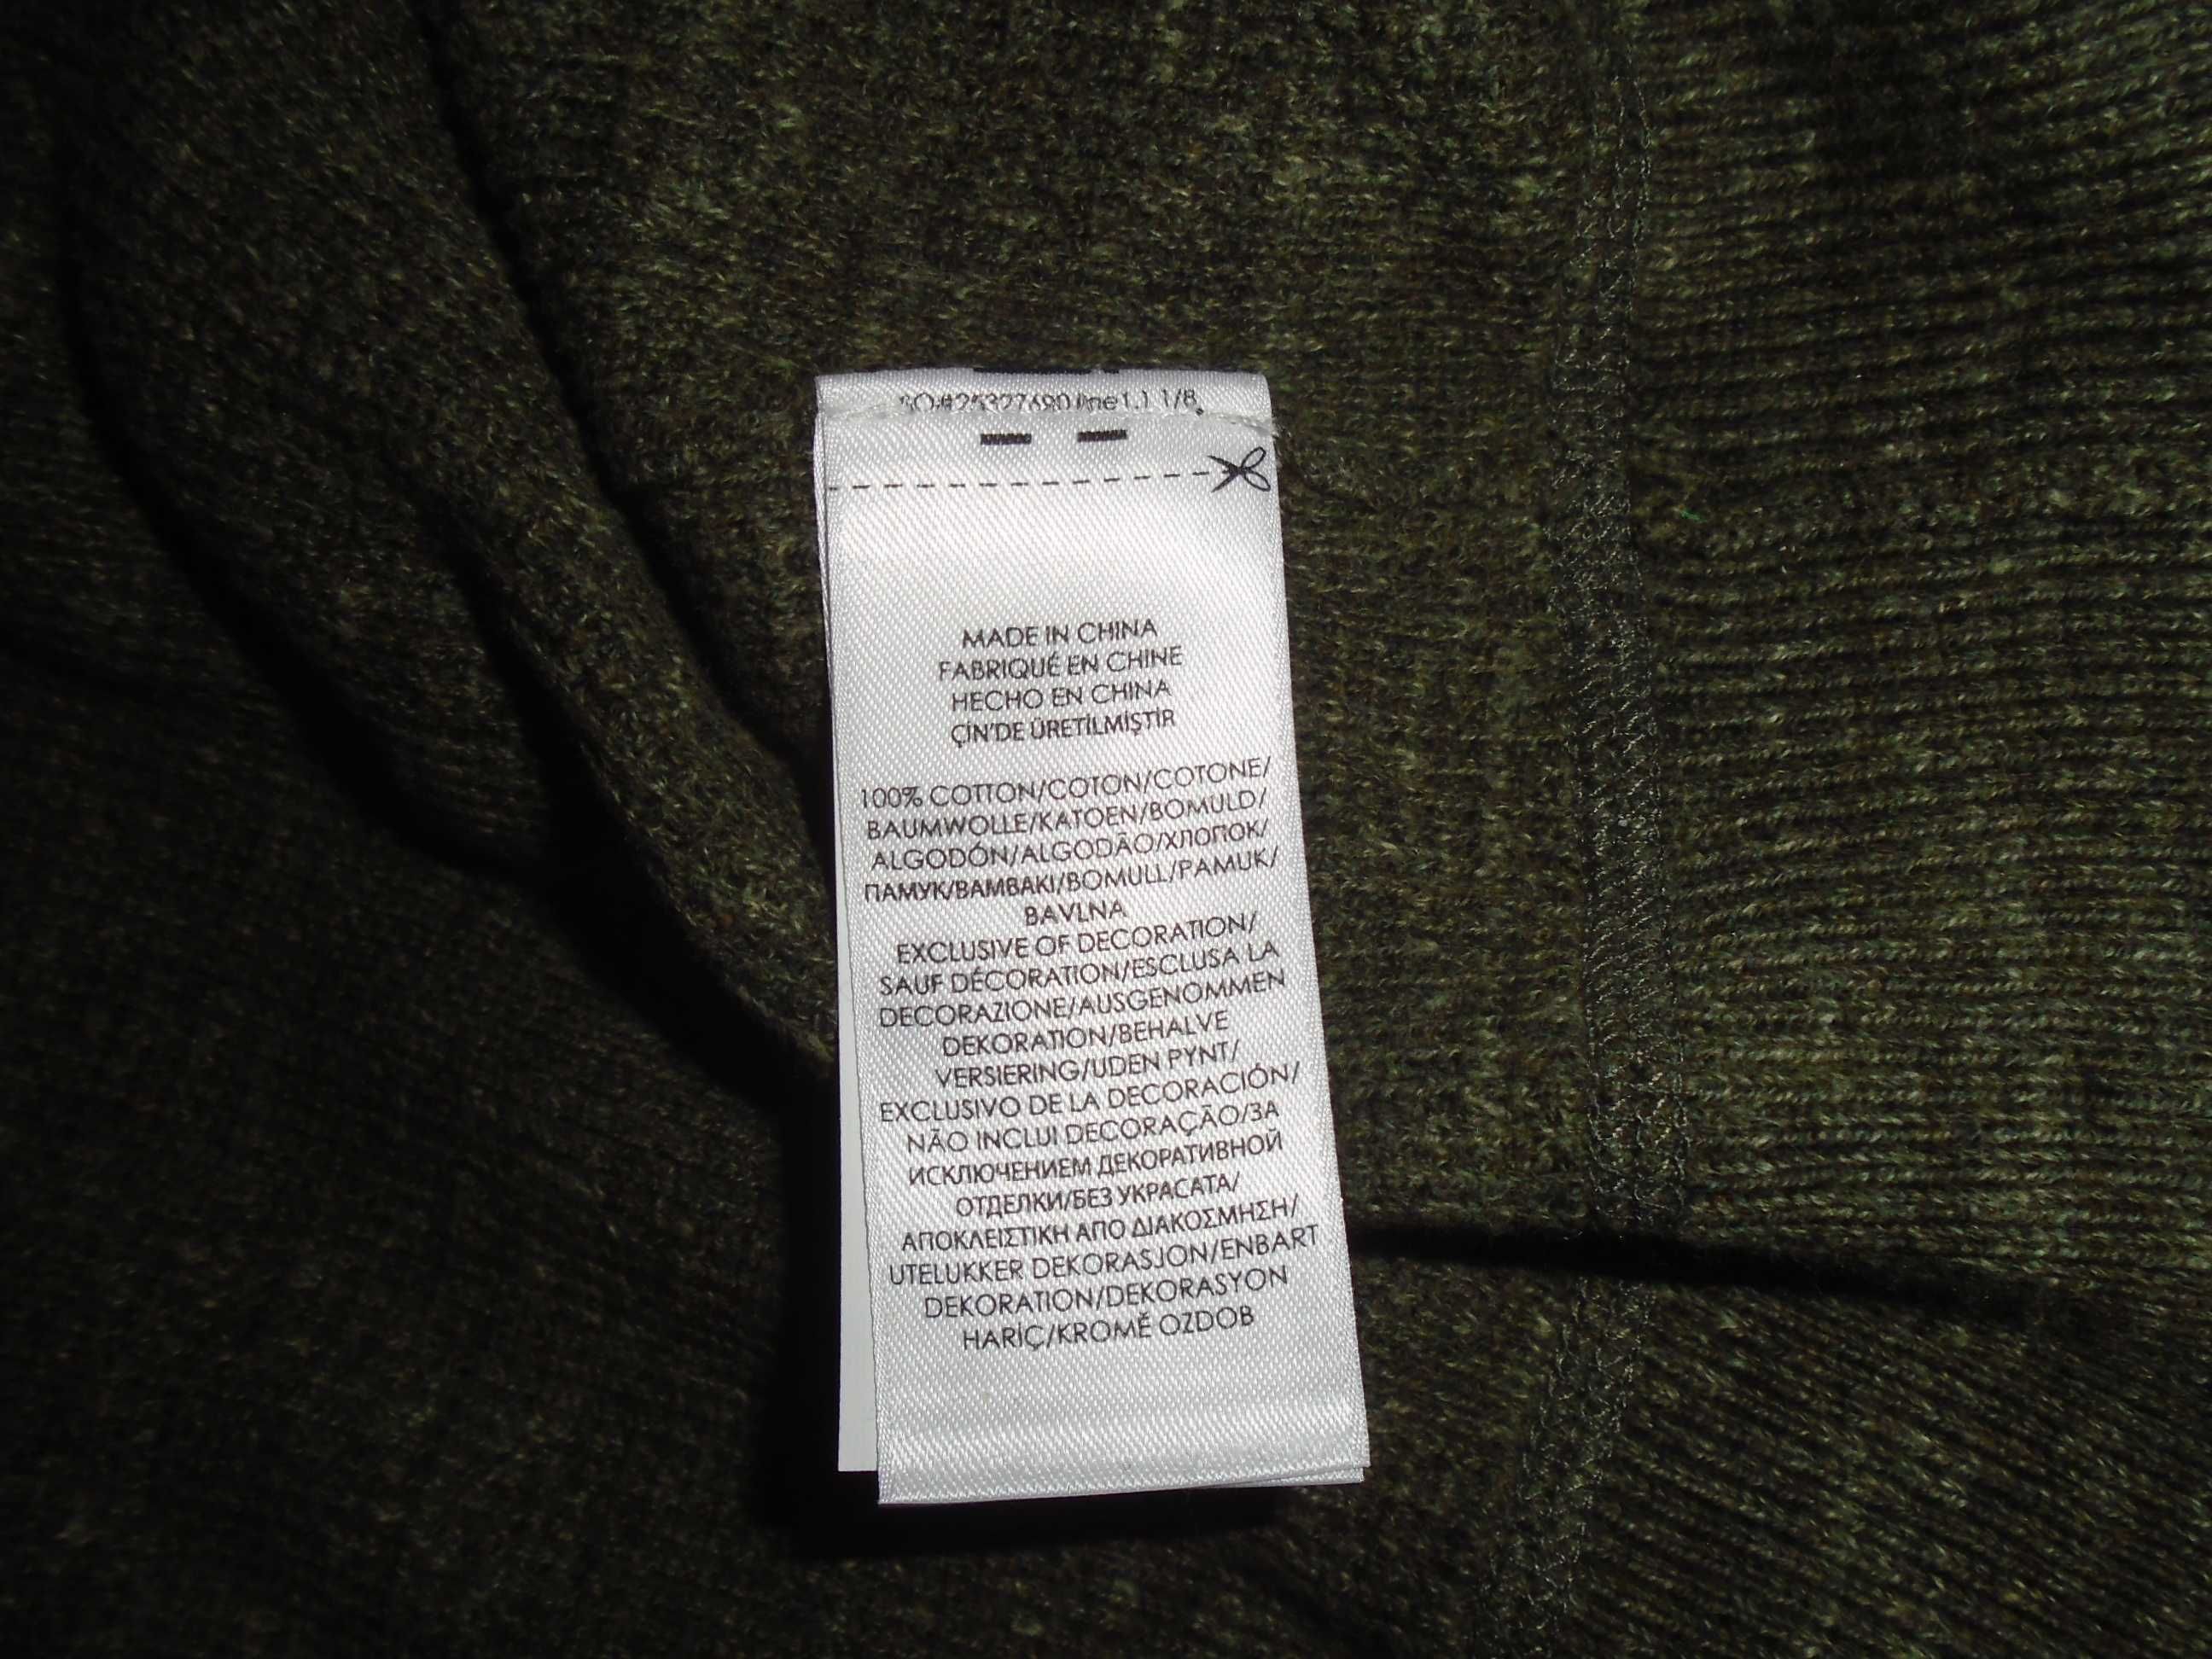 Polо Ralph Lauren USA L-XL (54)
свитер, свитерок, худи,толстовка,